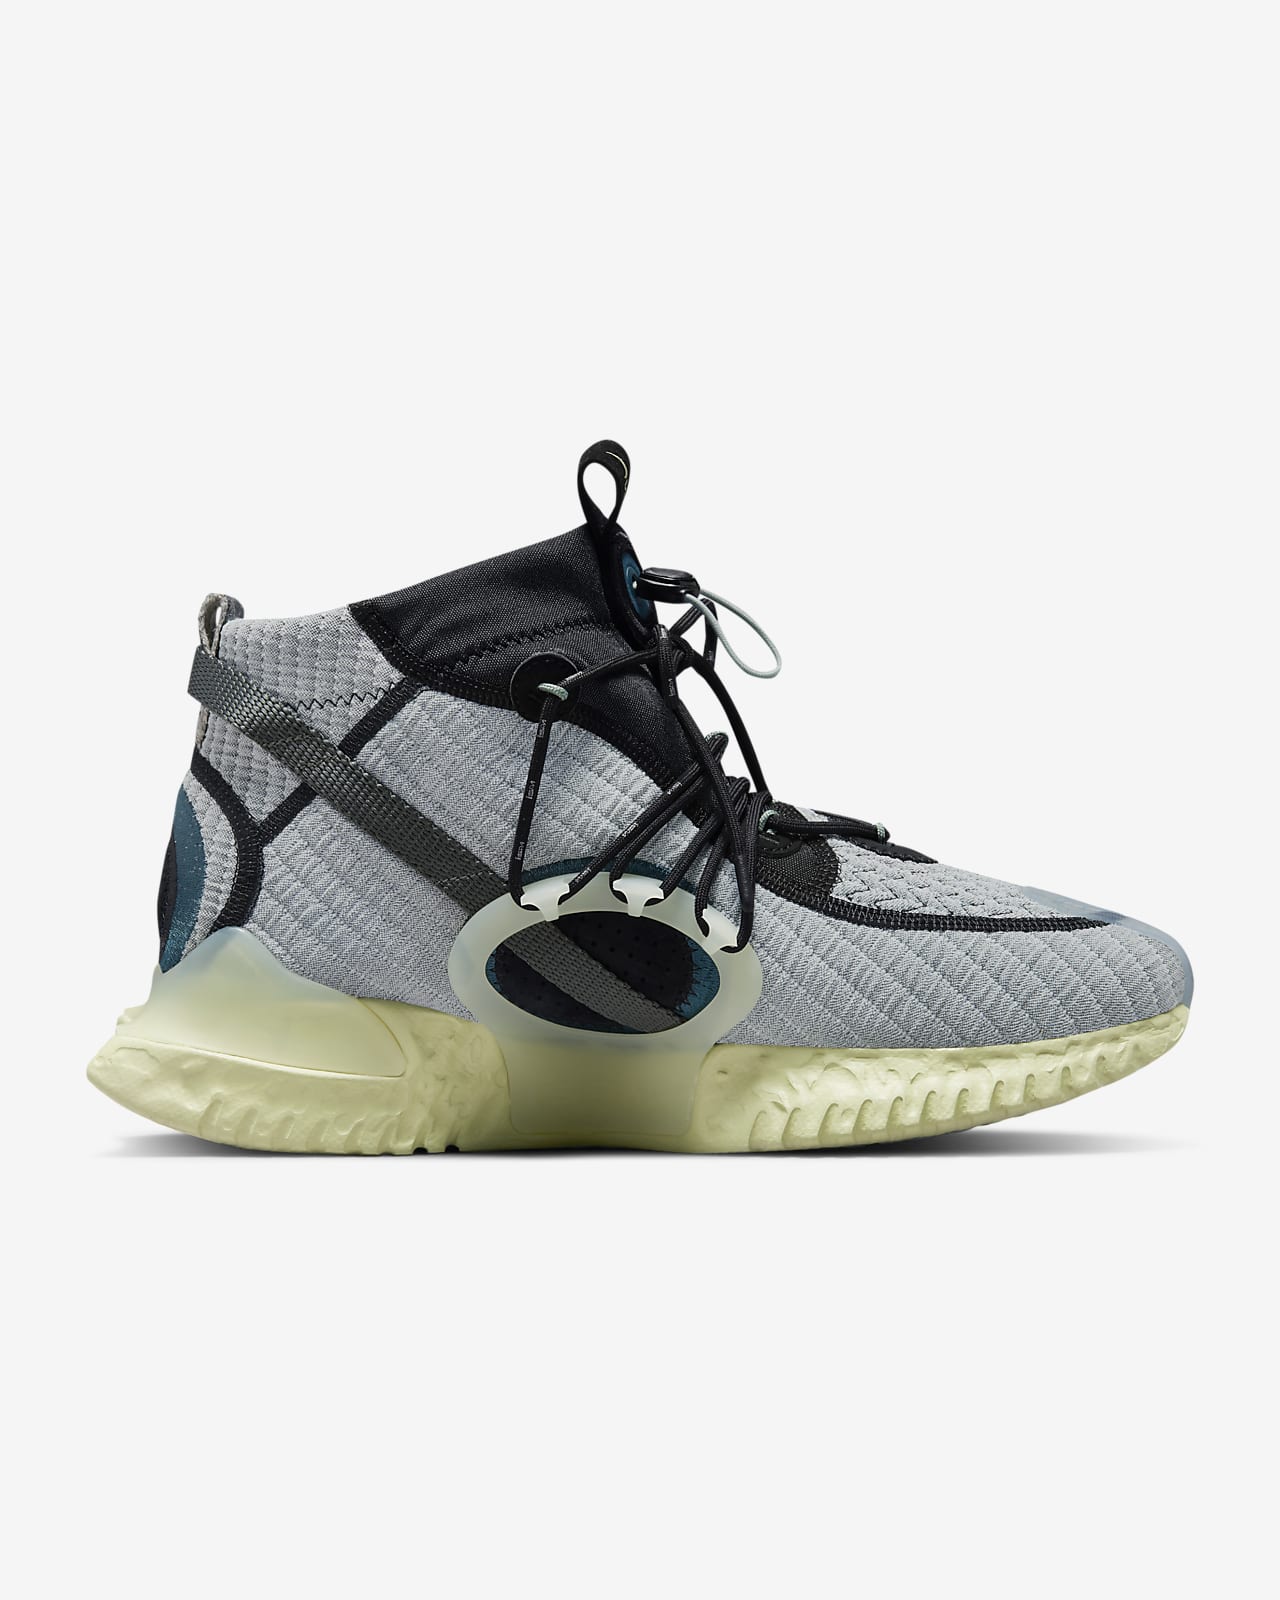 Nike Flow 2020 iSPA SE Shoes